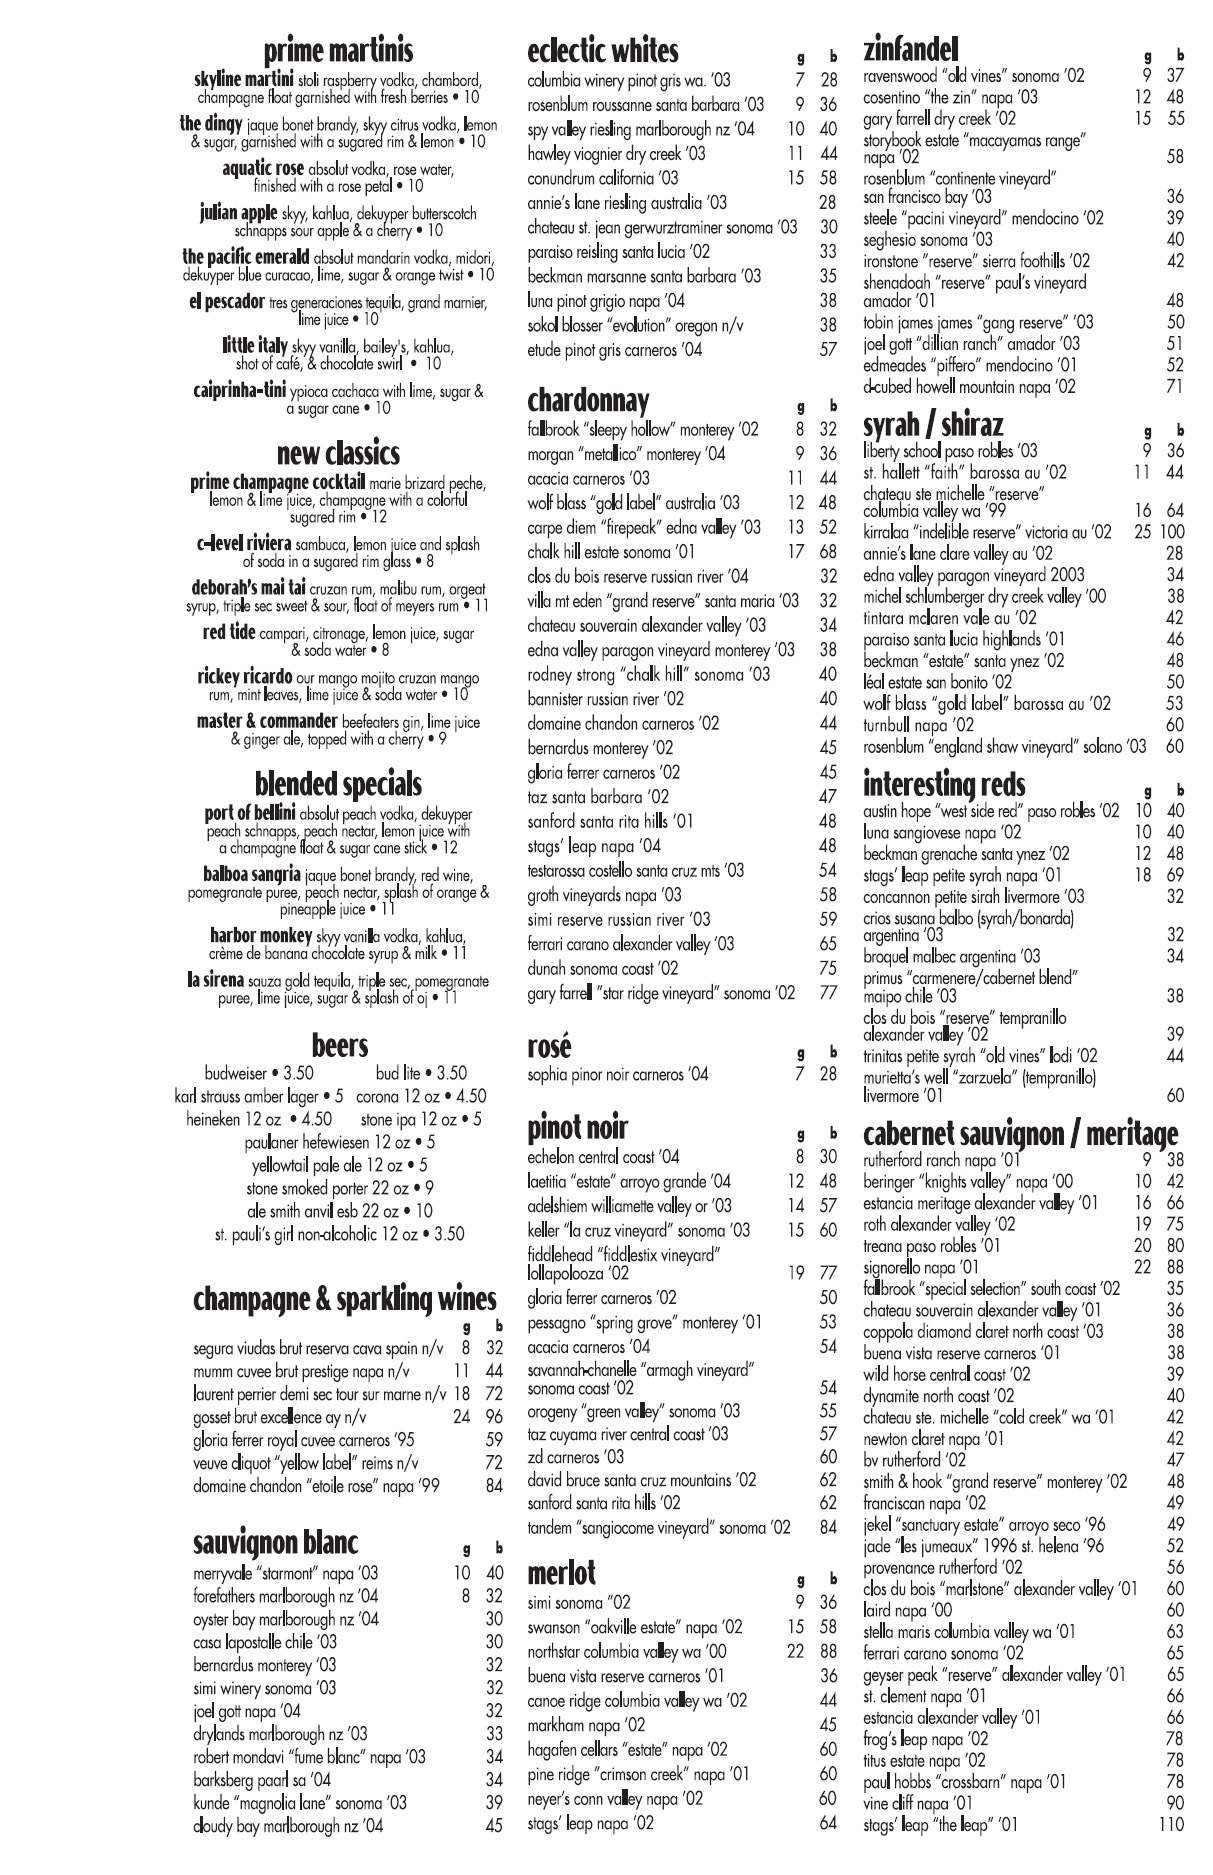 c-level wine list 2007